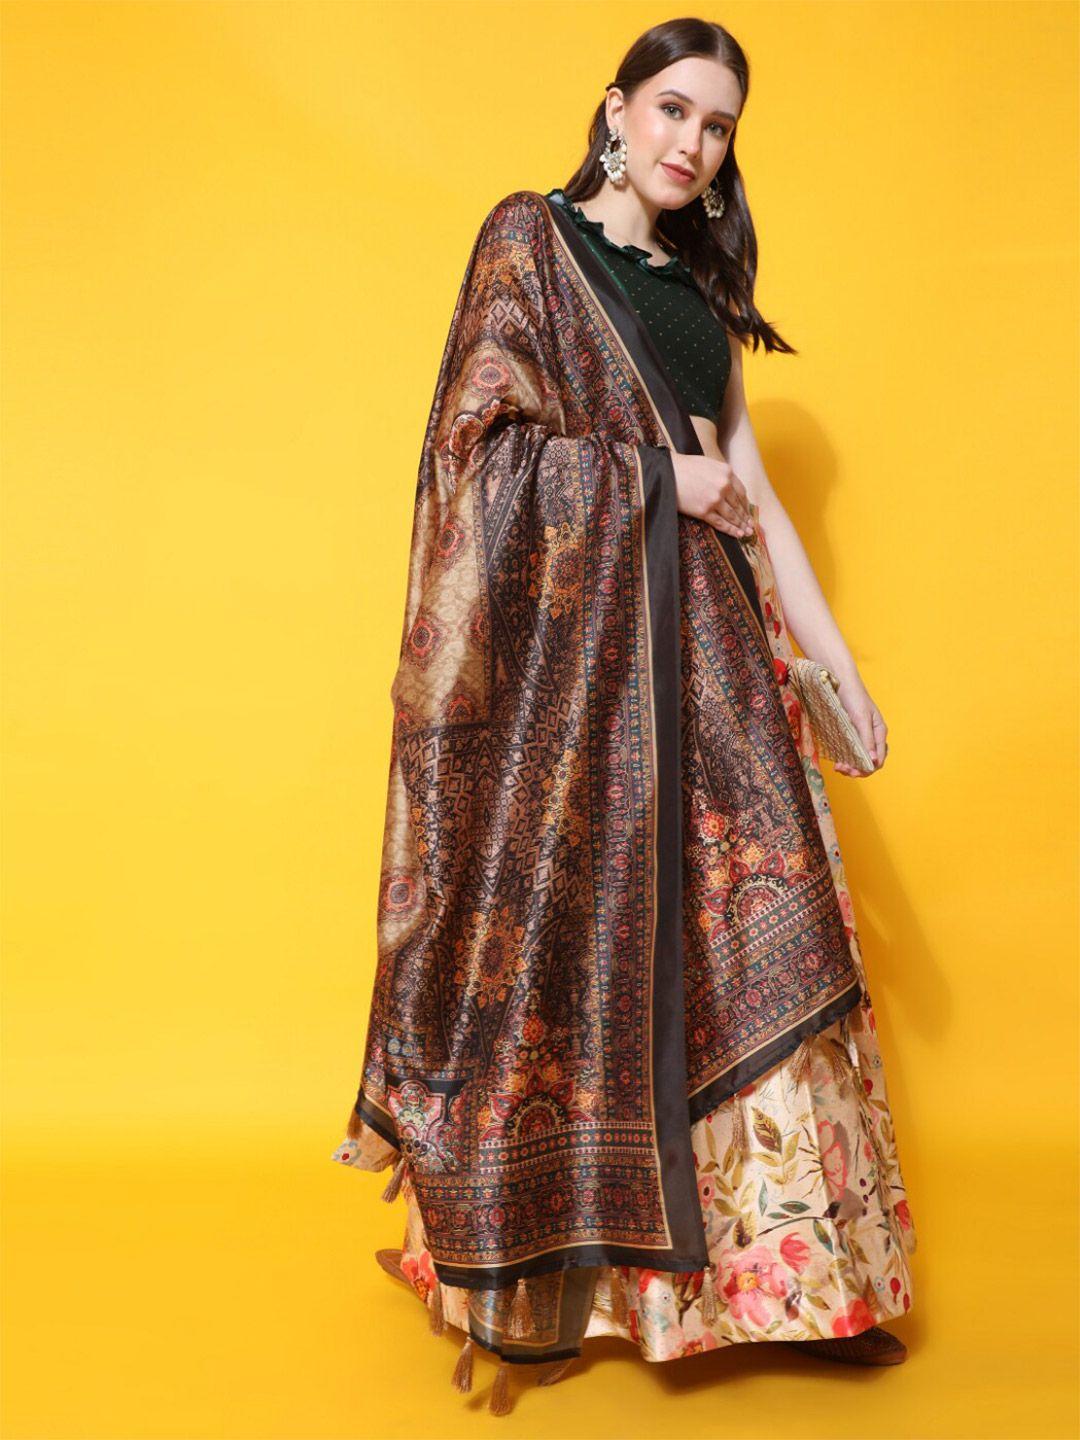 kaizen texo fab printed semi-stitched lehenga & unstitched blouse with dupatta